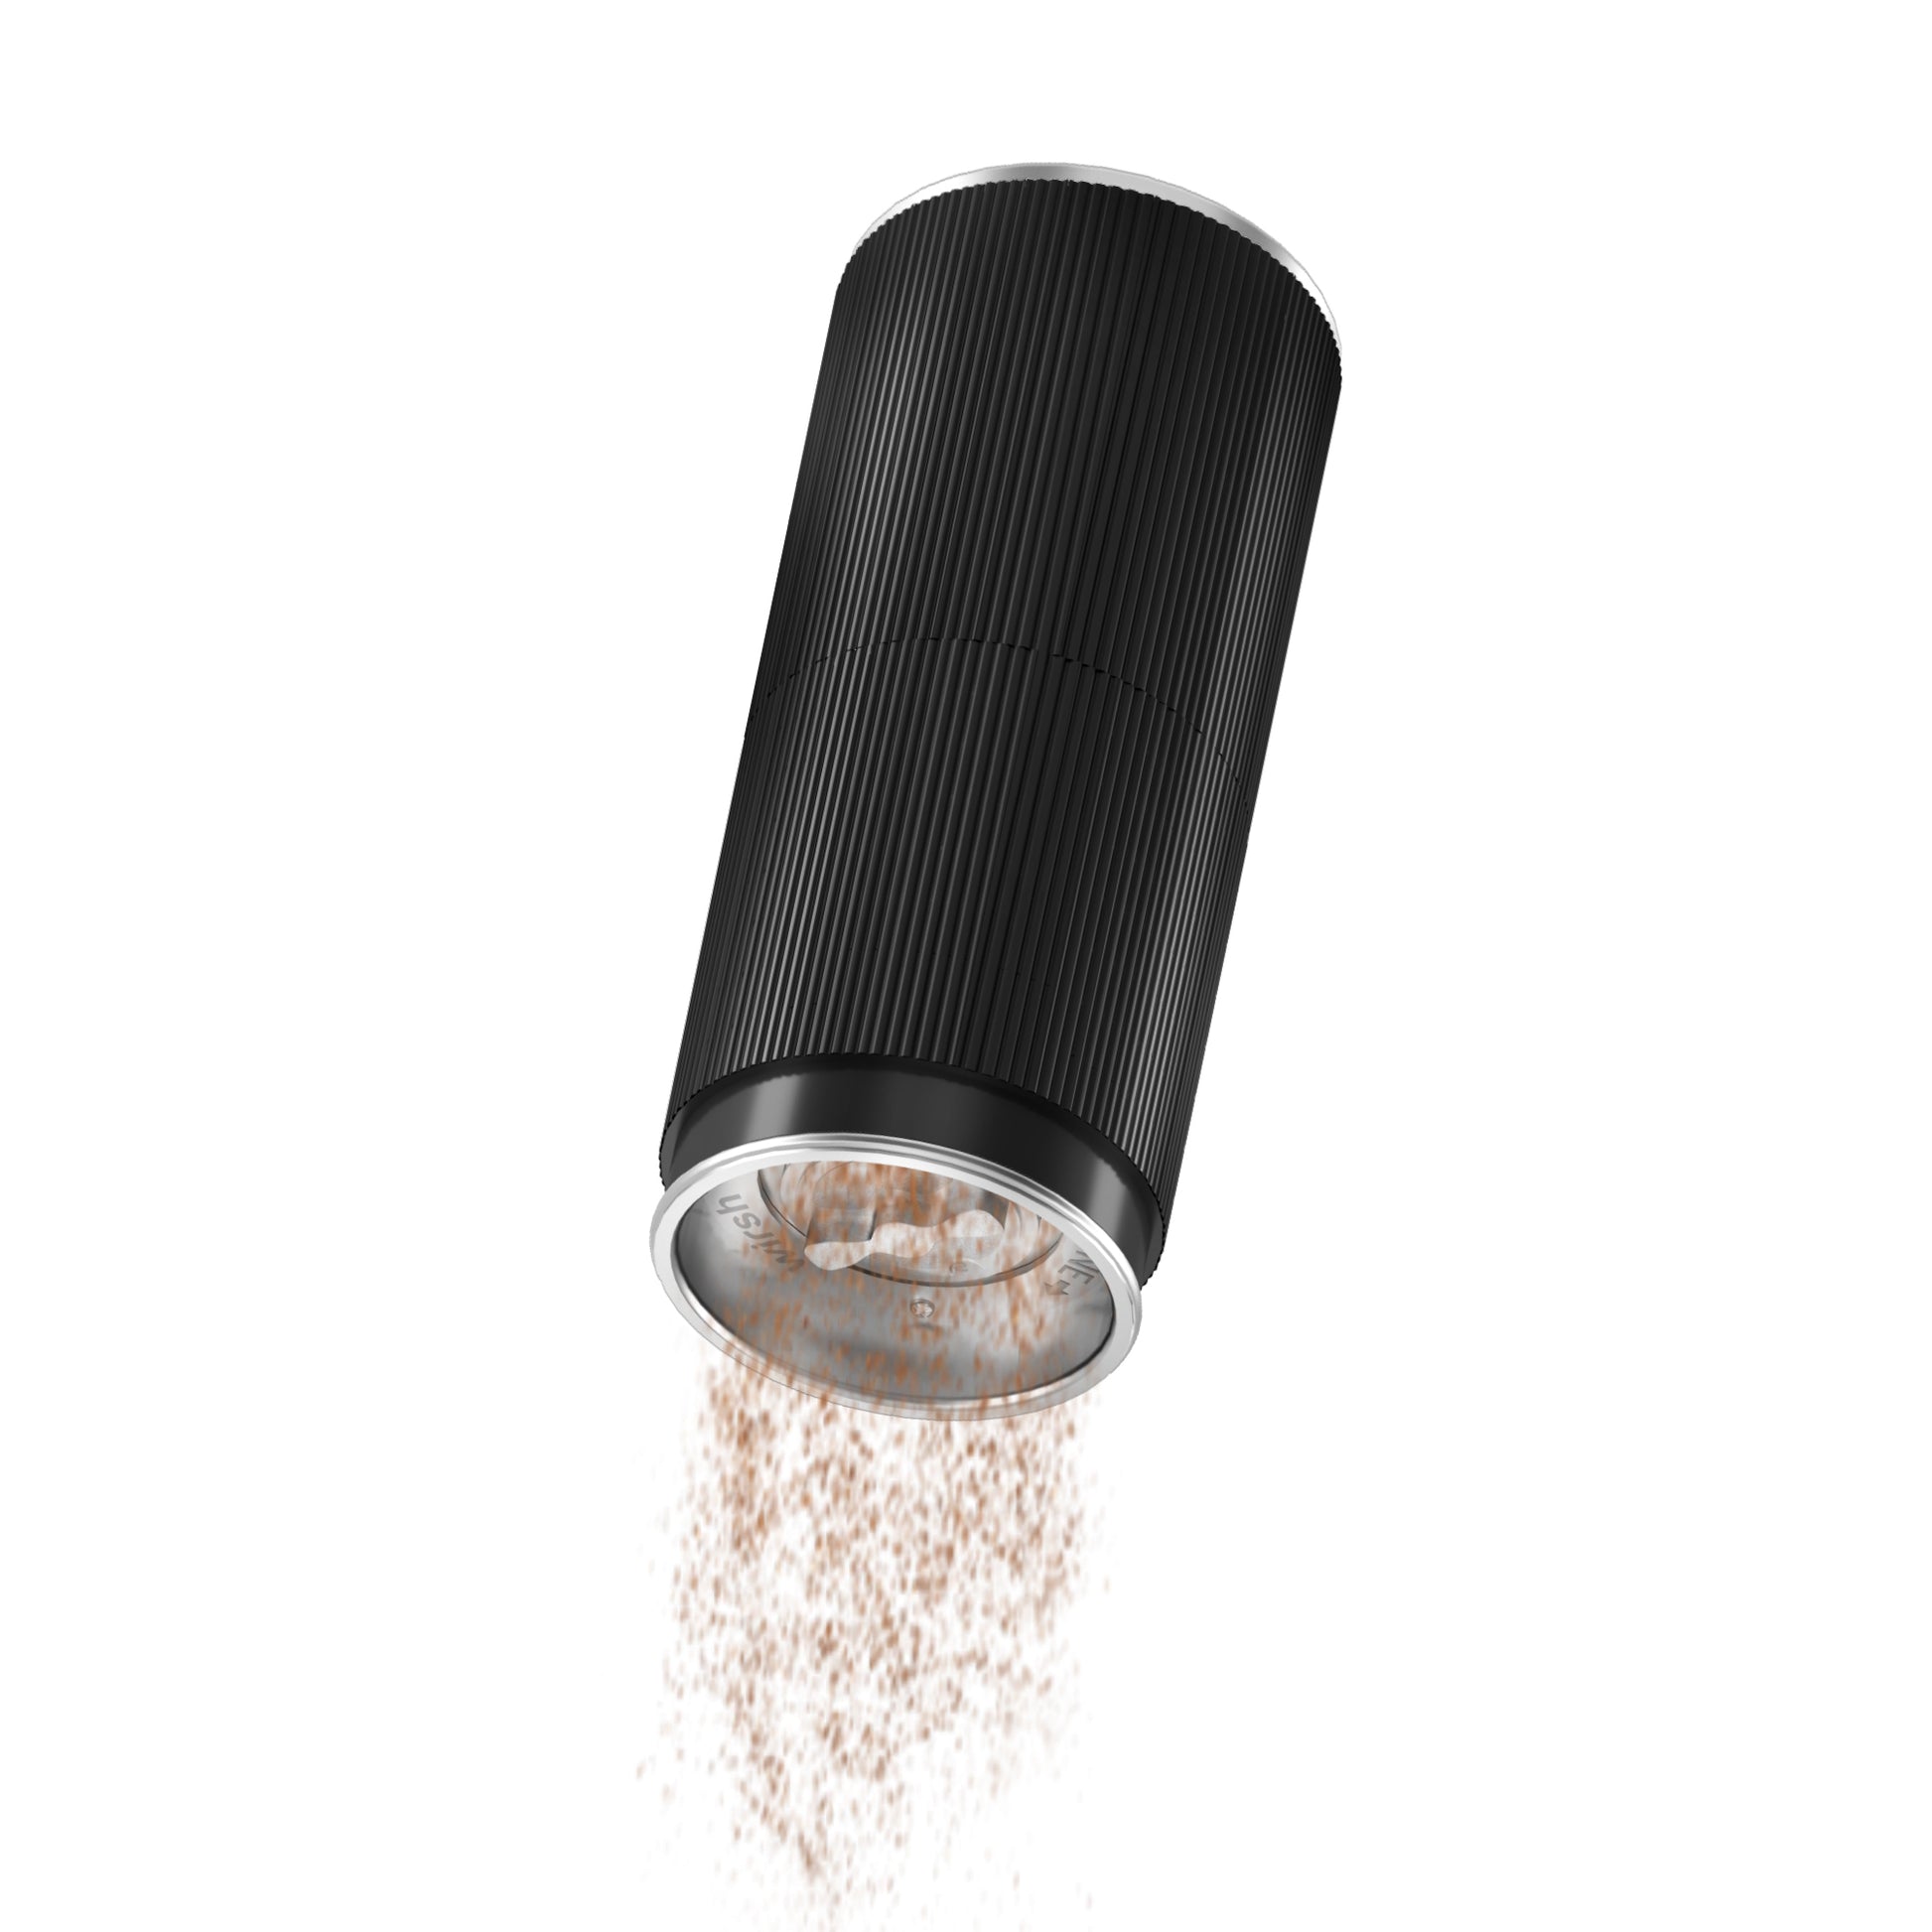 <img src="coffee grinder.jpg" alt="wirsh poratable coffee grinder grinding coffee"/>